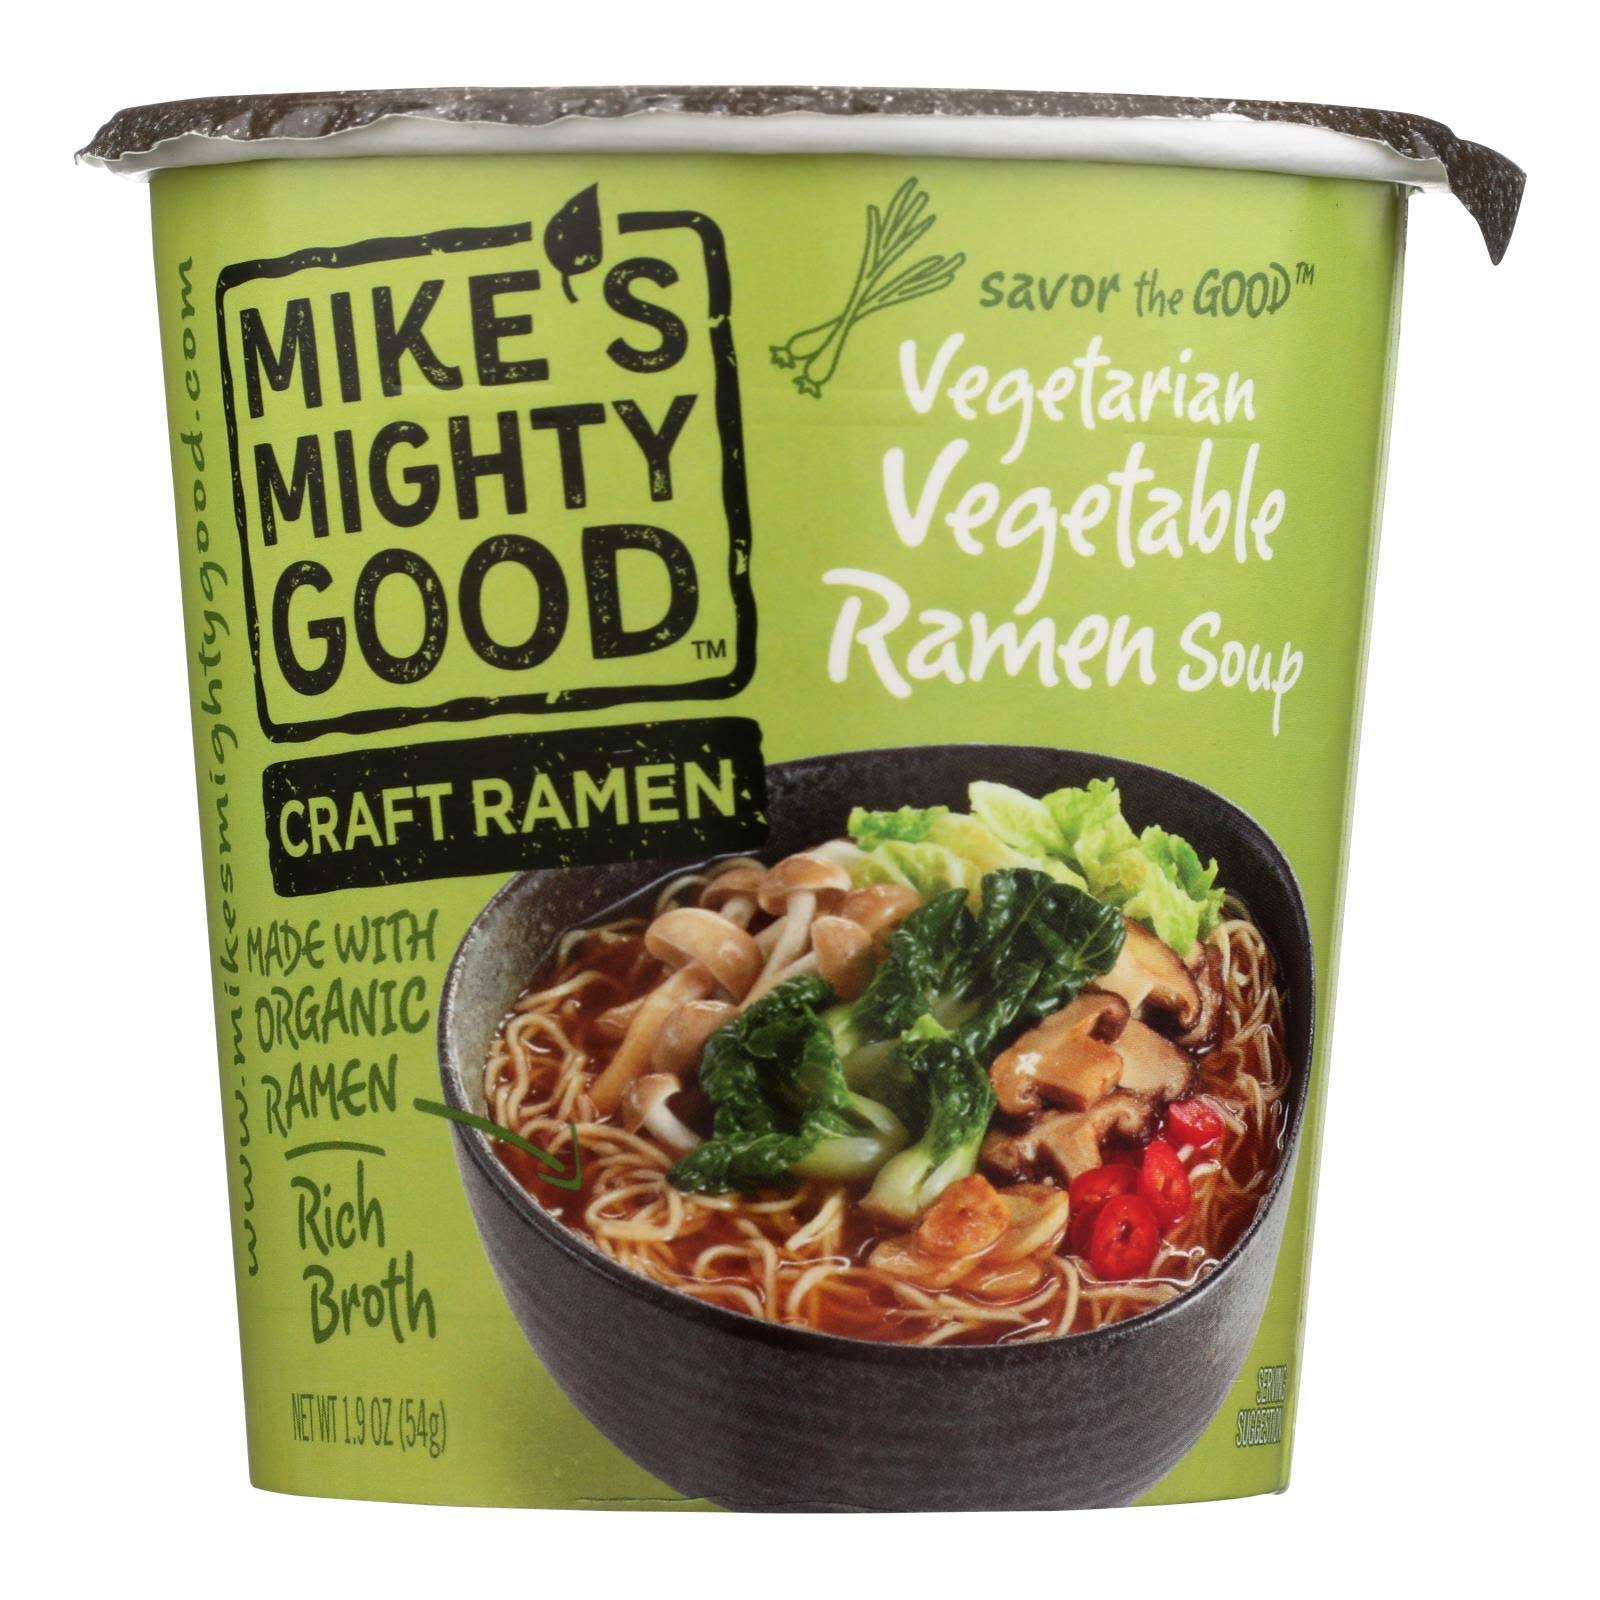 Mike's Mighty Good Ramen Soup, Vegetarian Vegetable - 1.9 oz